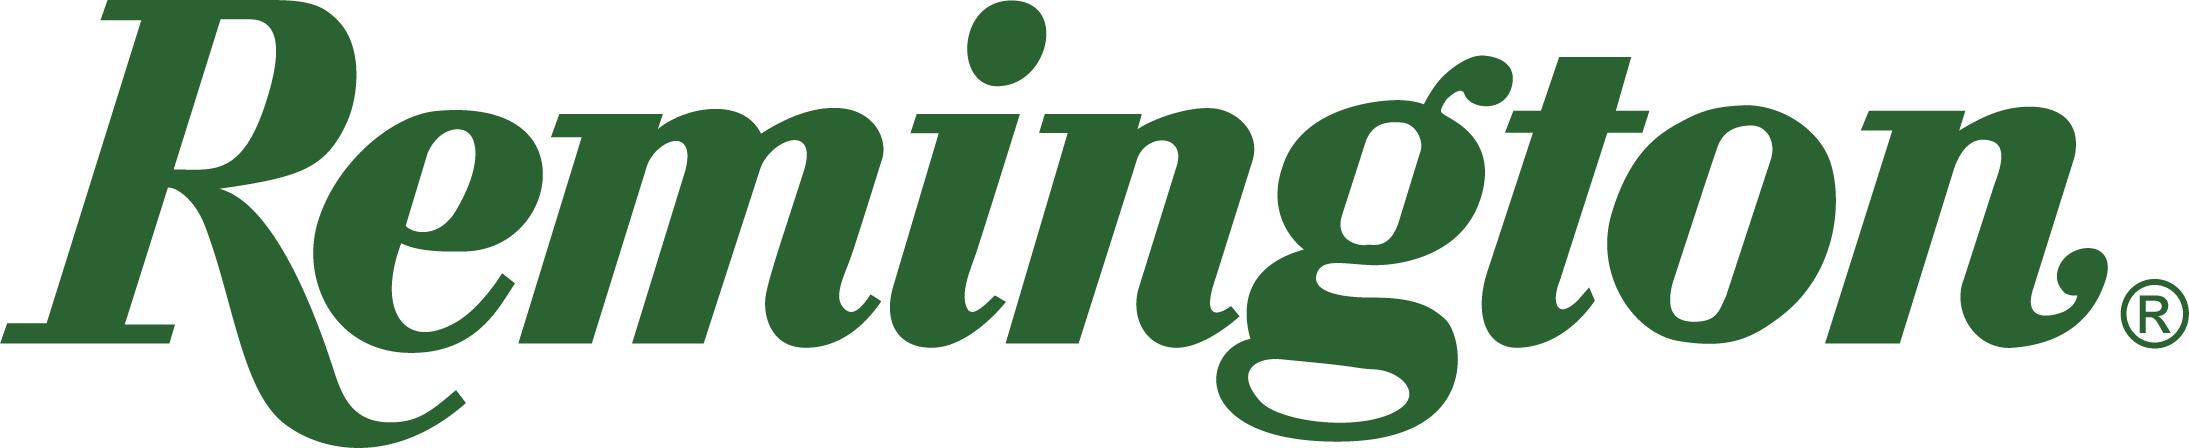 Remington logo green